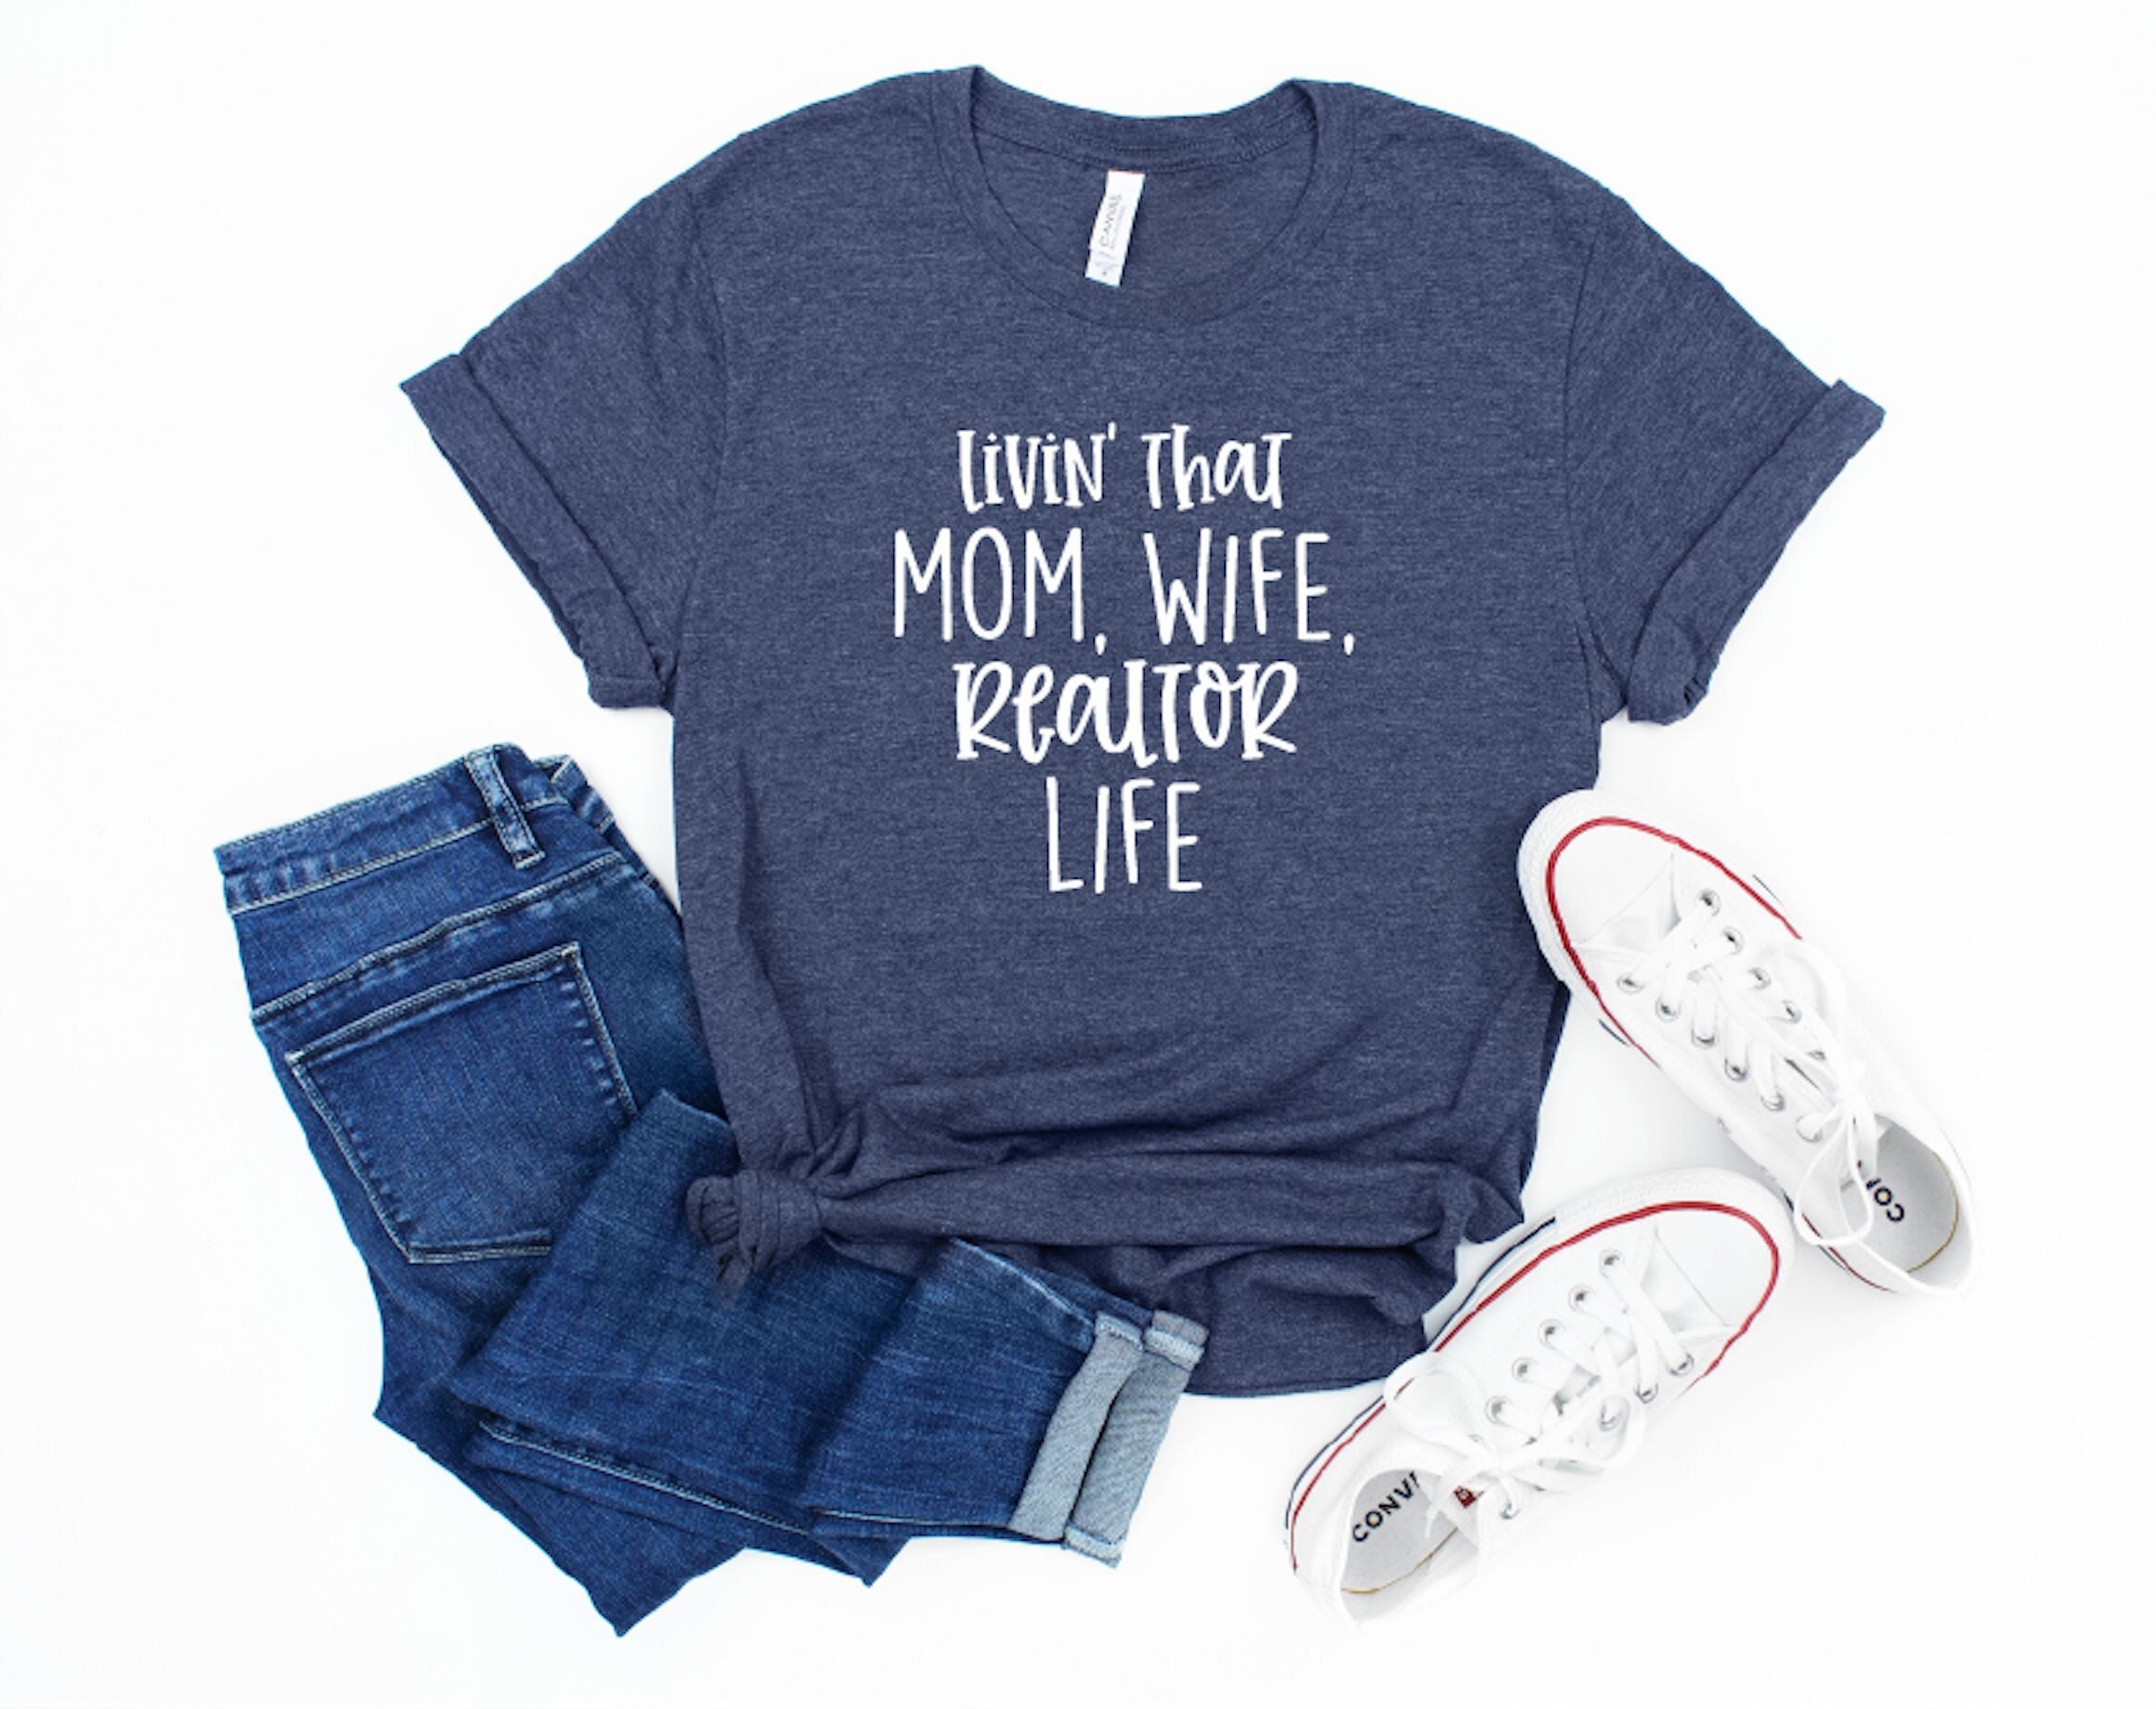 Livin That Mom Wife Realtor Life Shirt